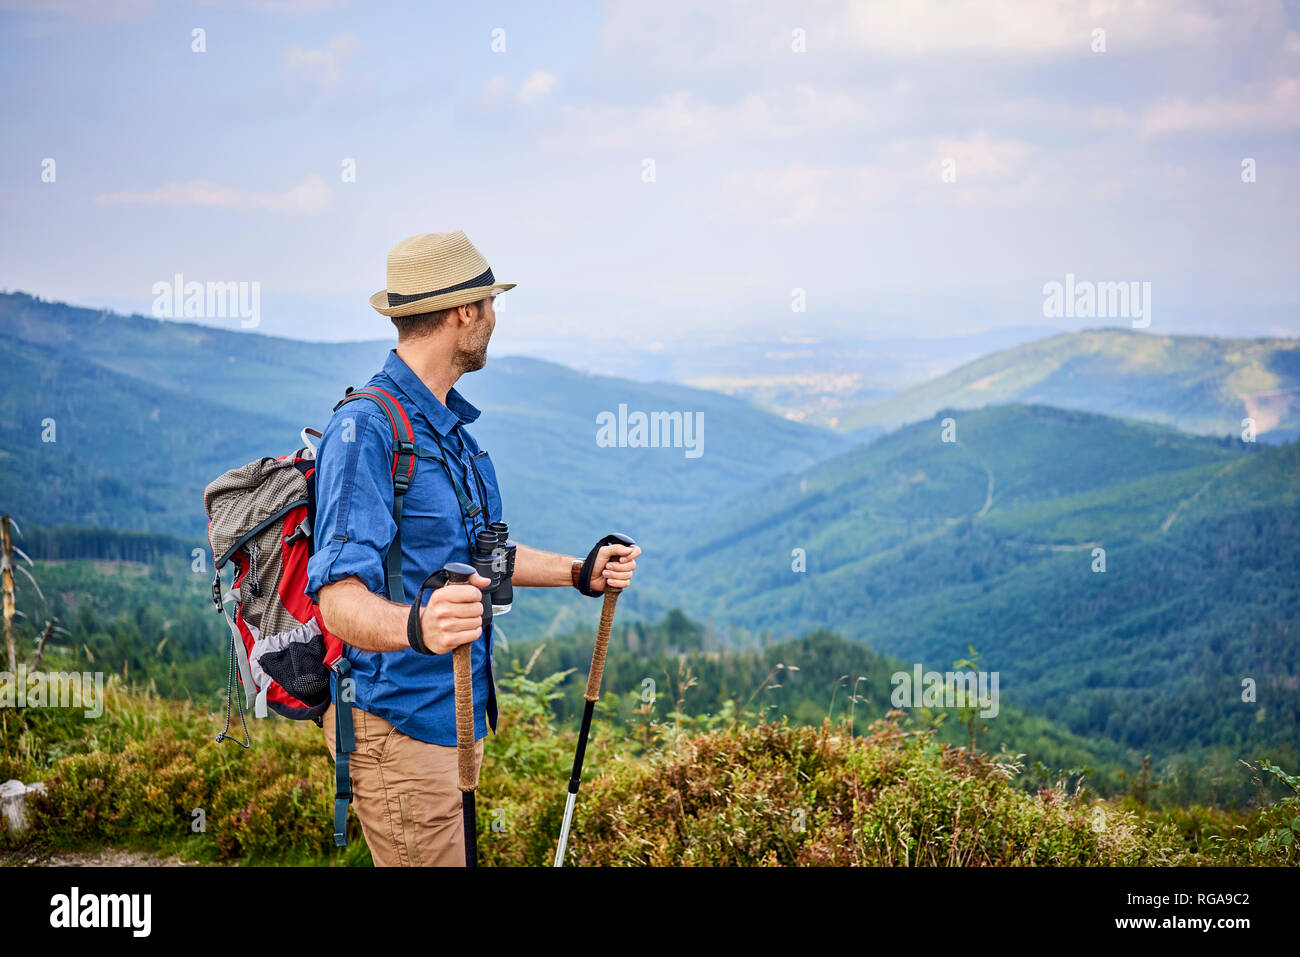 Man admiring the mountain view during hiking trip Stock Photo